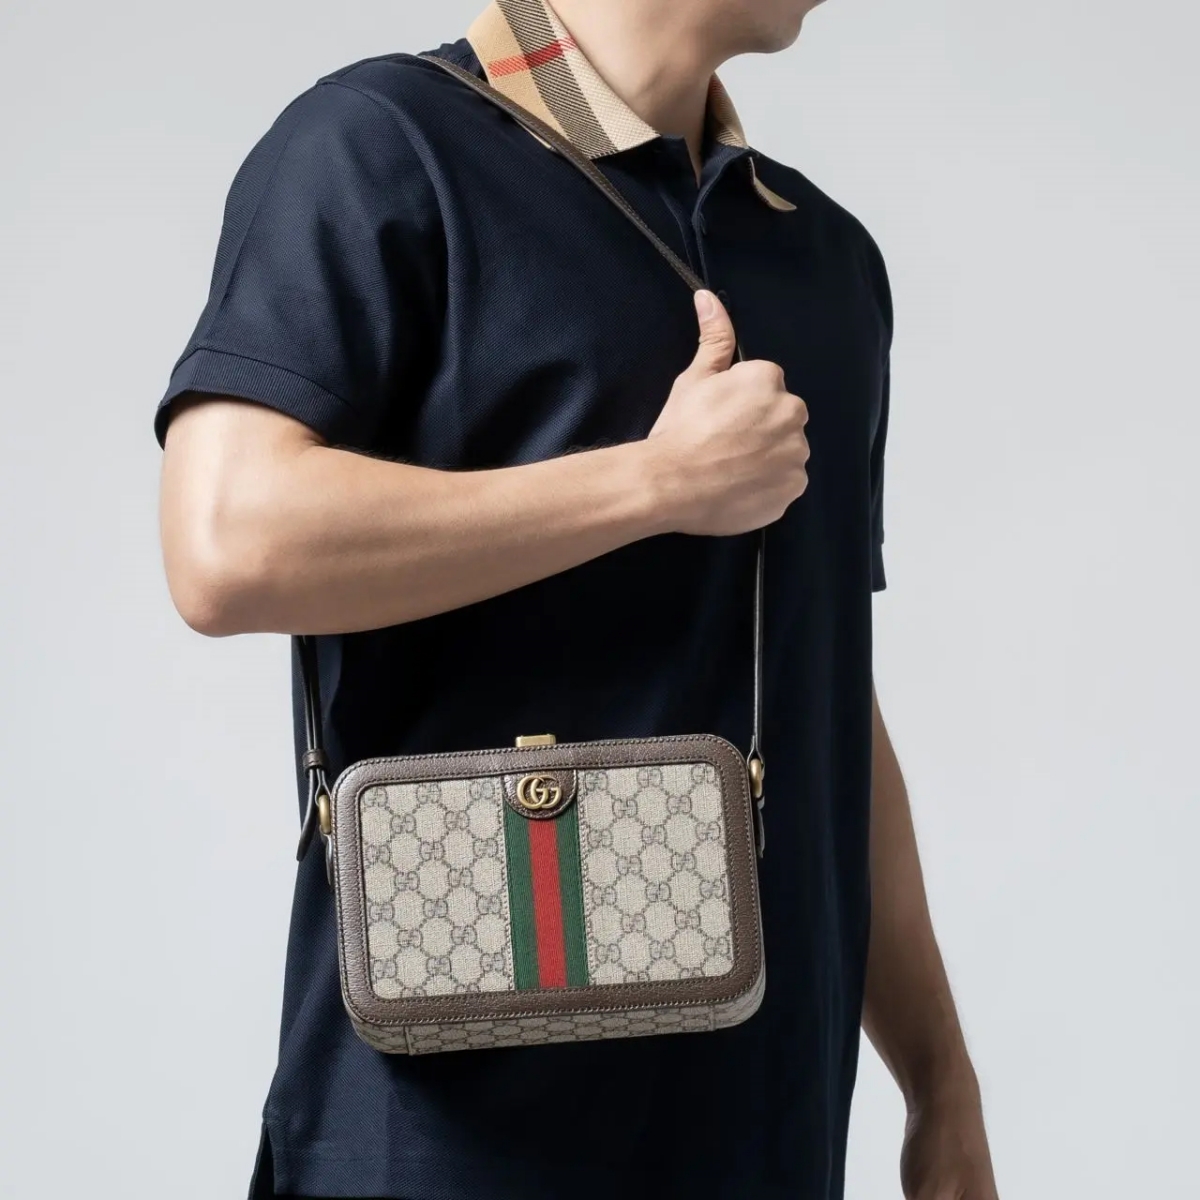 Gucci GG Supreme Canvas Messenger Bag Beige Ebony Brown